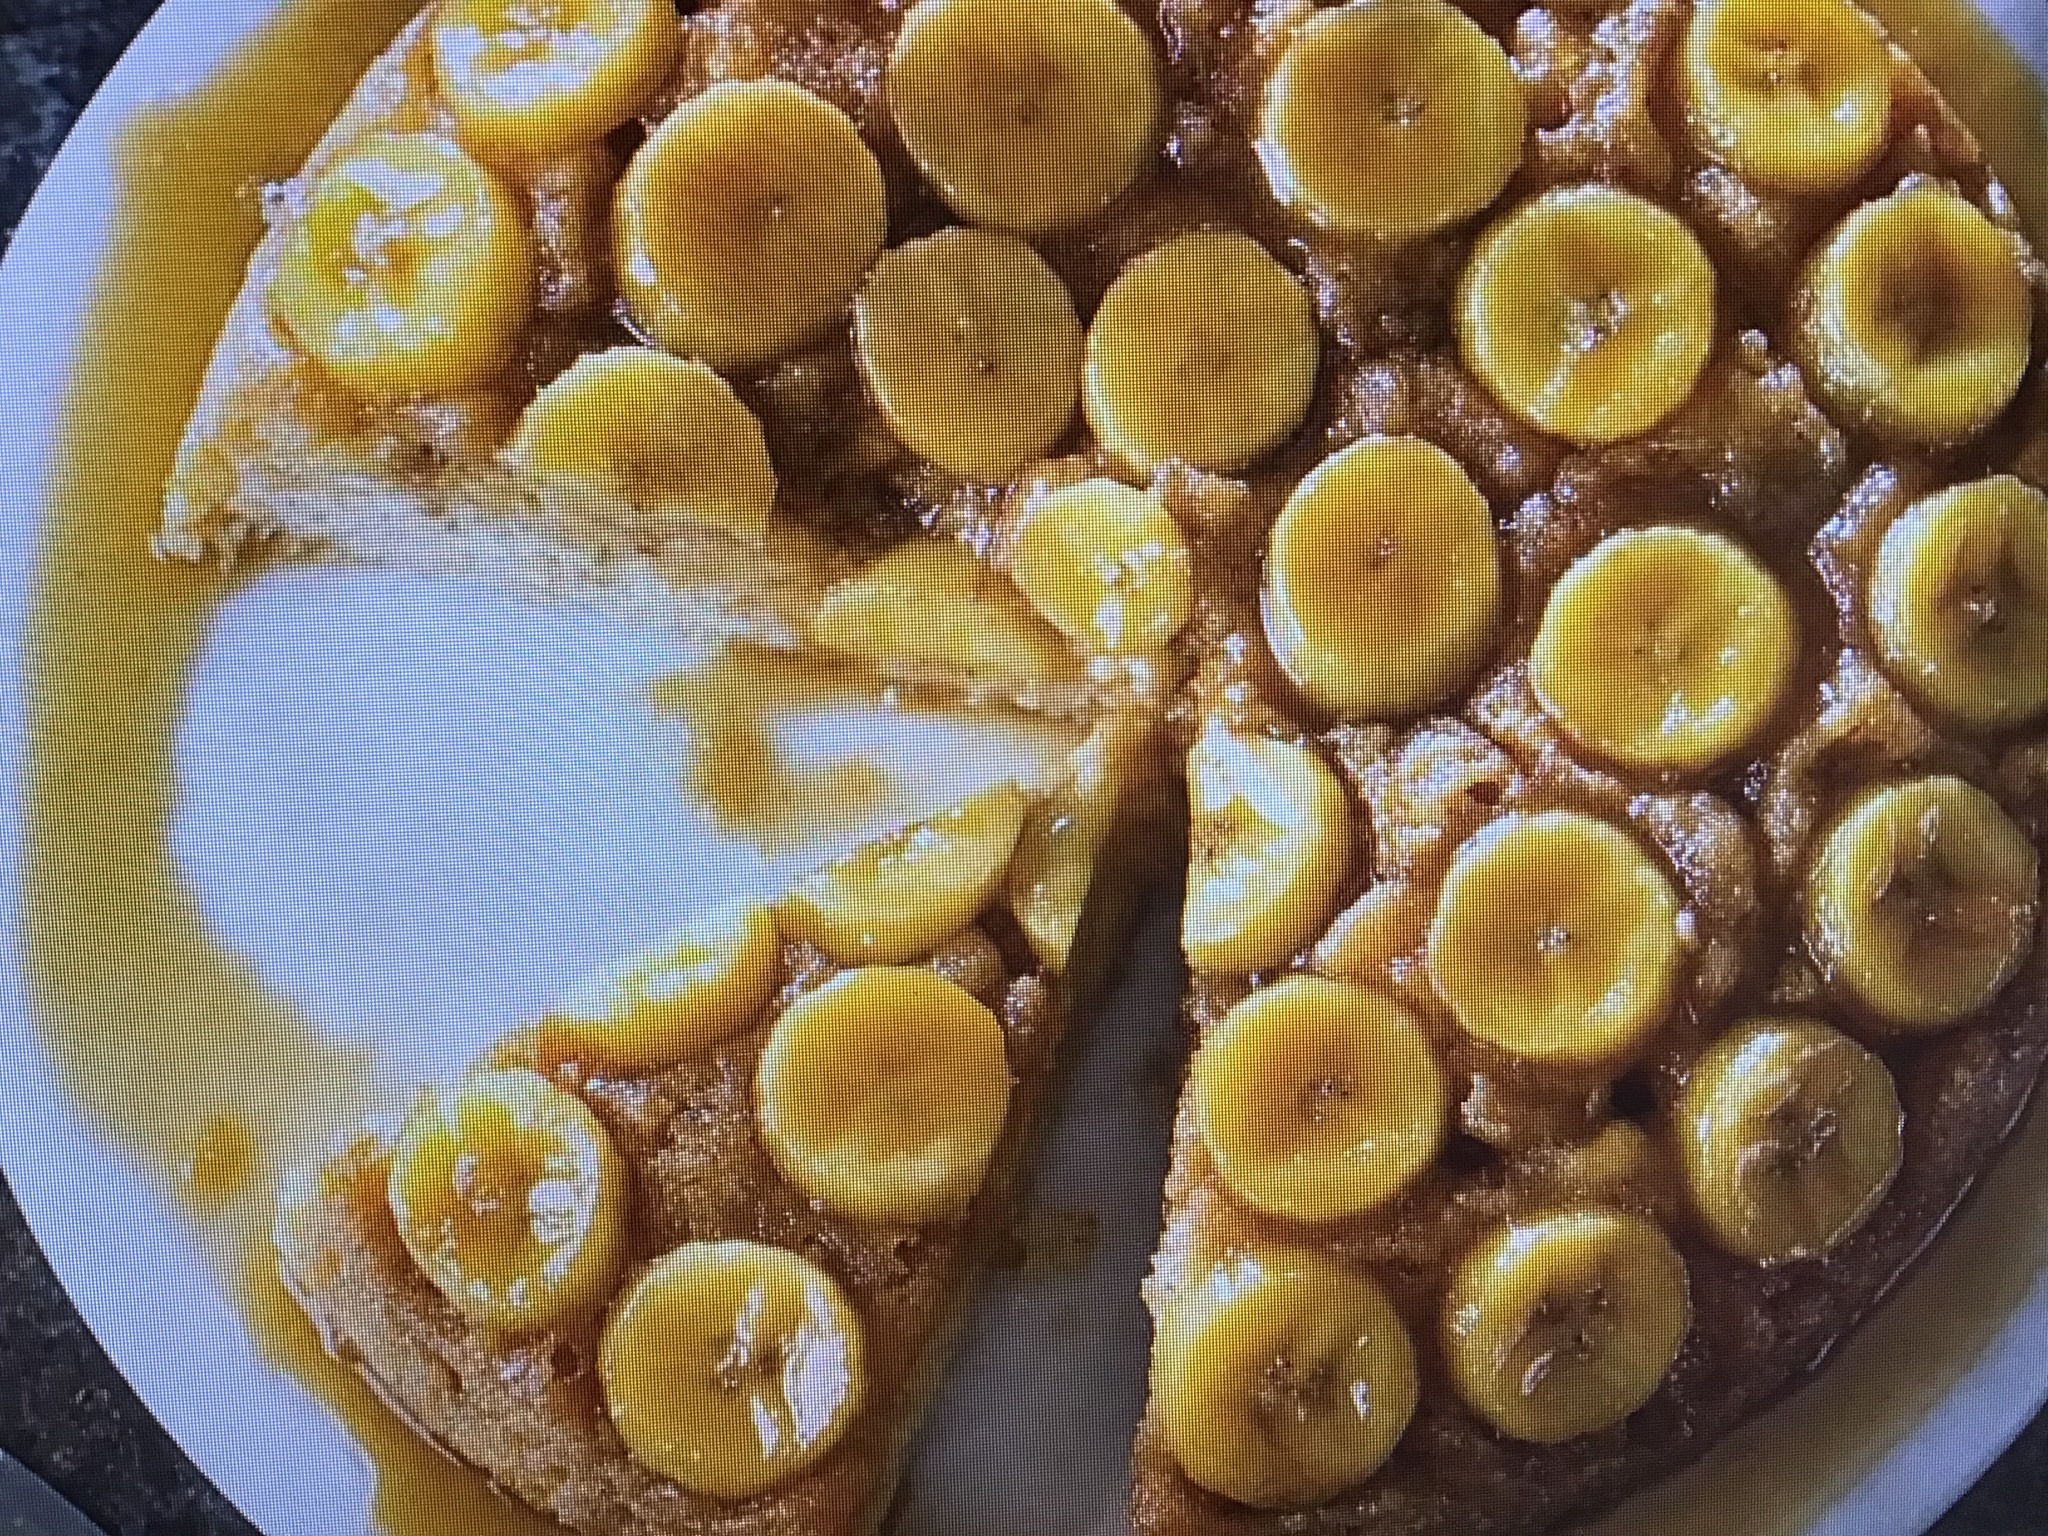 Heavenly Banana Foster Upside-Down Cake